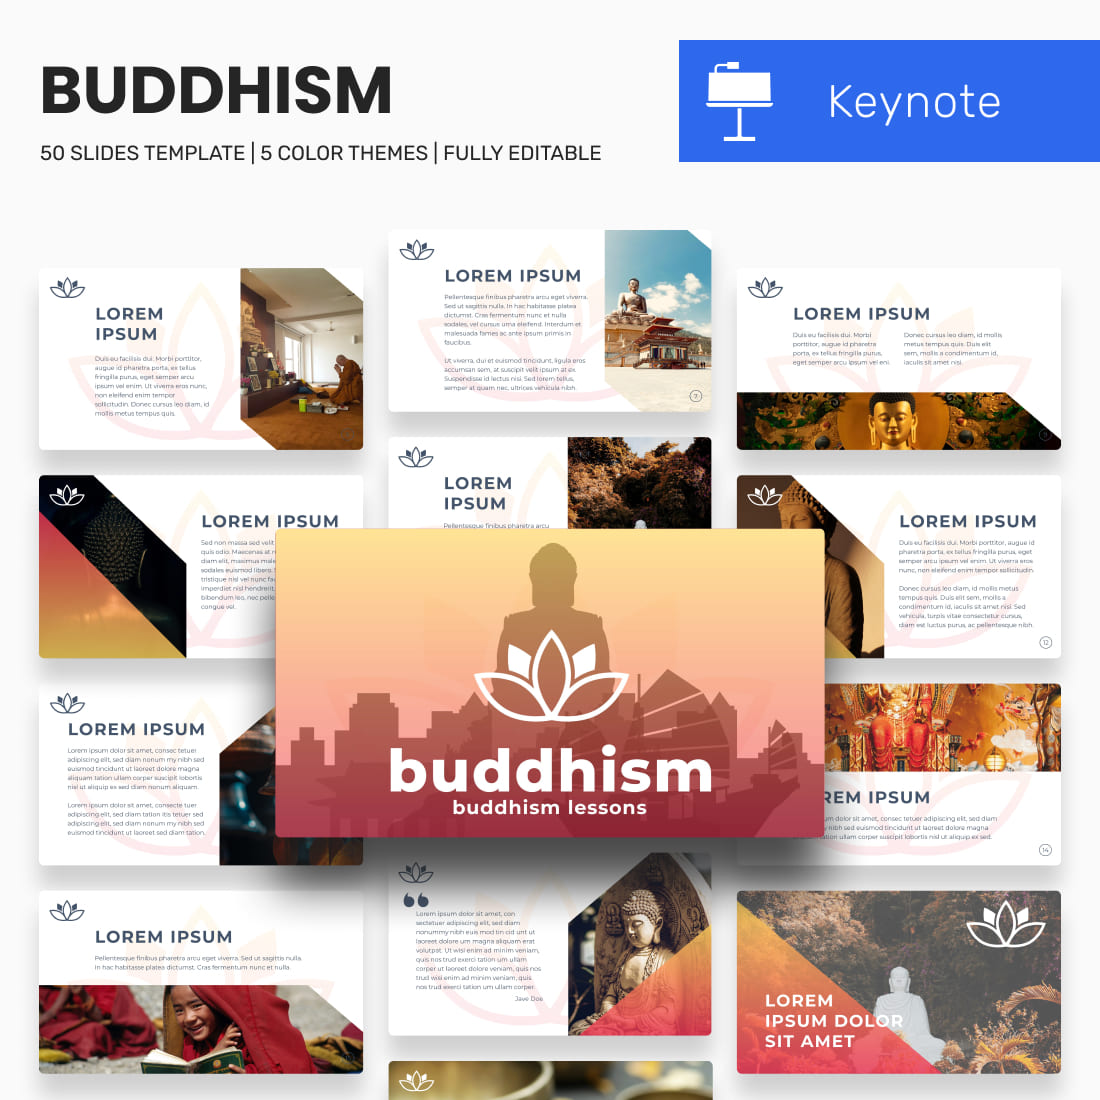 Buddhism keynote template.